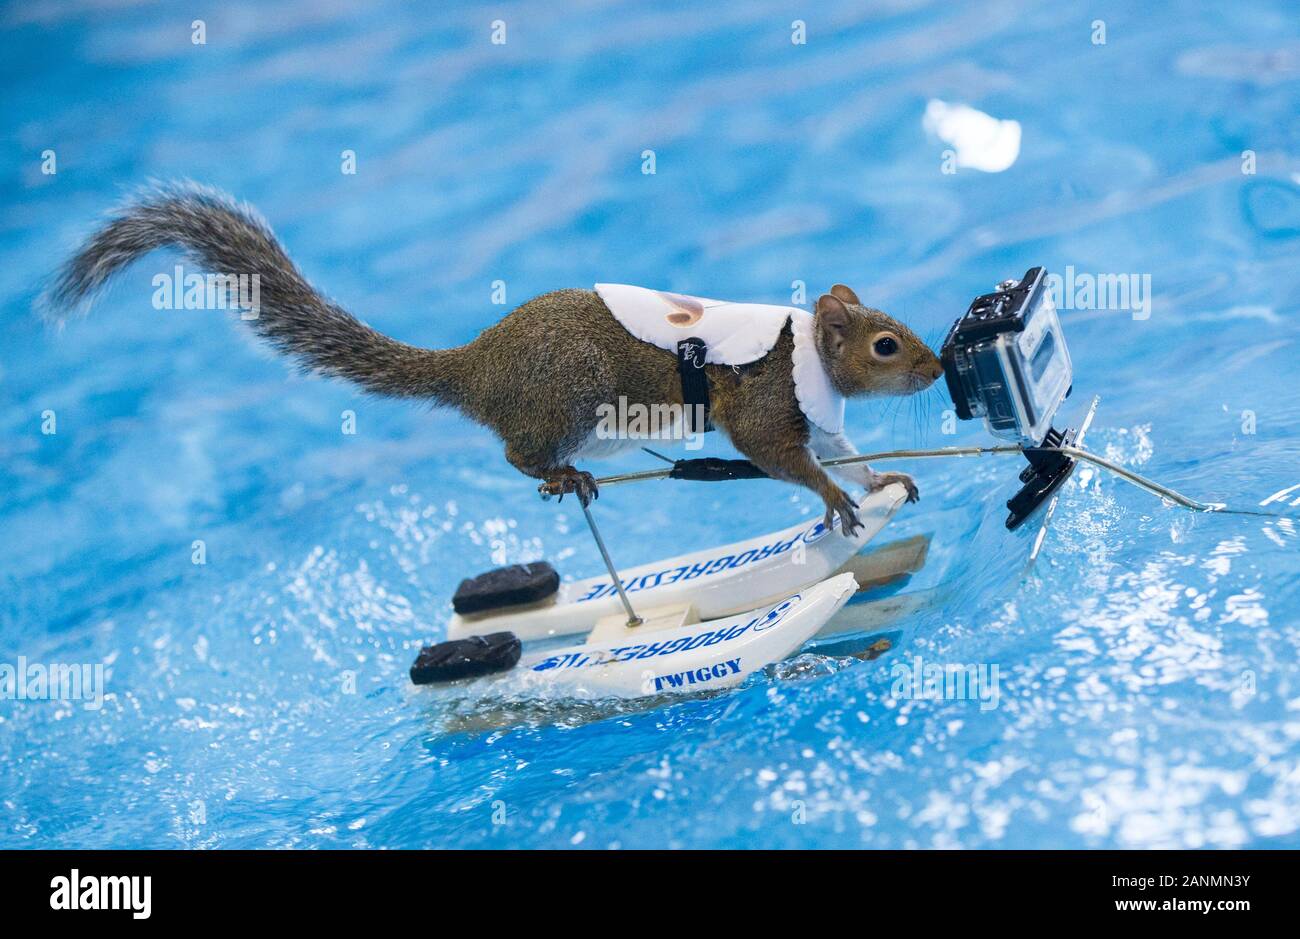 Toronto, Canada. 17th Jan, 2020. A squirrel performs water-skiing during the 2020 Toronto International Boat Show in Toronto, Canada, Jan. 17, 2020. Credit: Zou Zheng/Xinhua/Alamy Live News Stock Photo